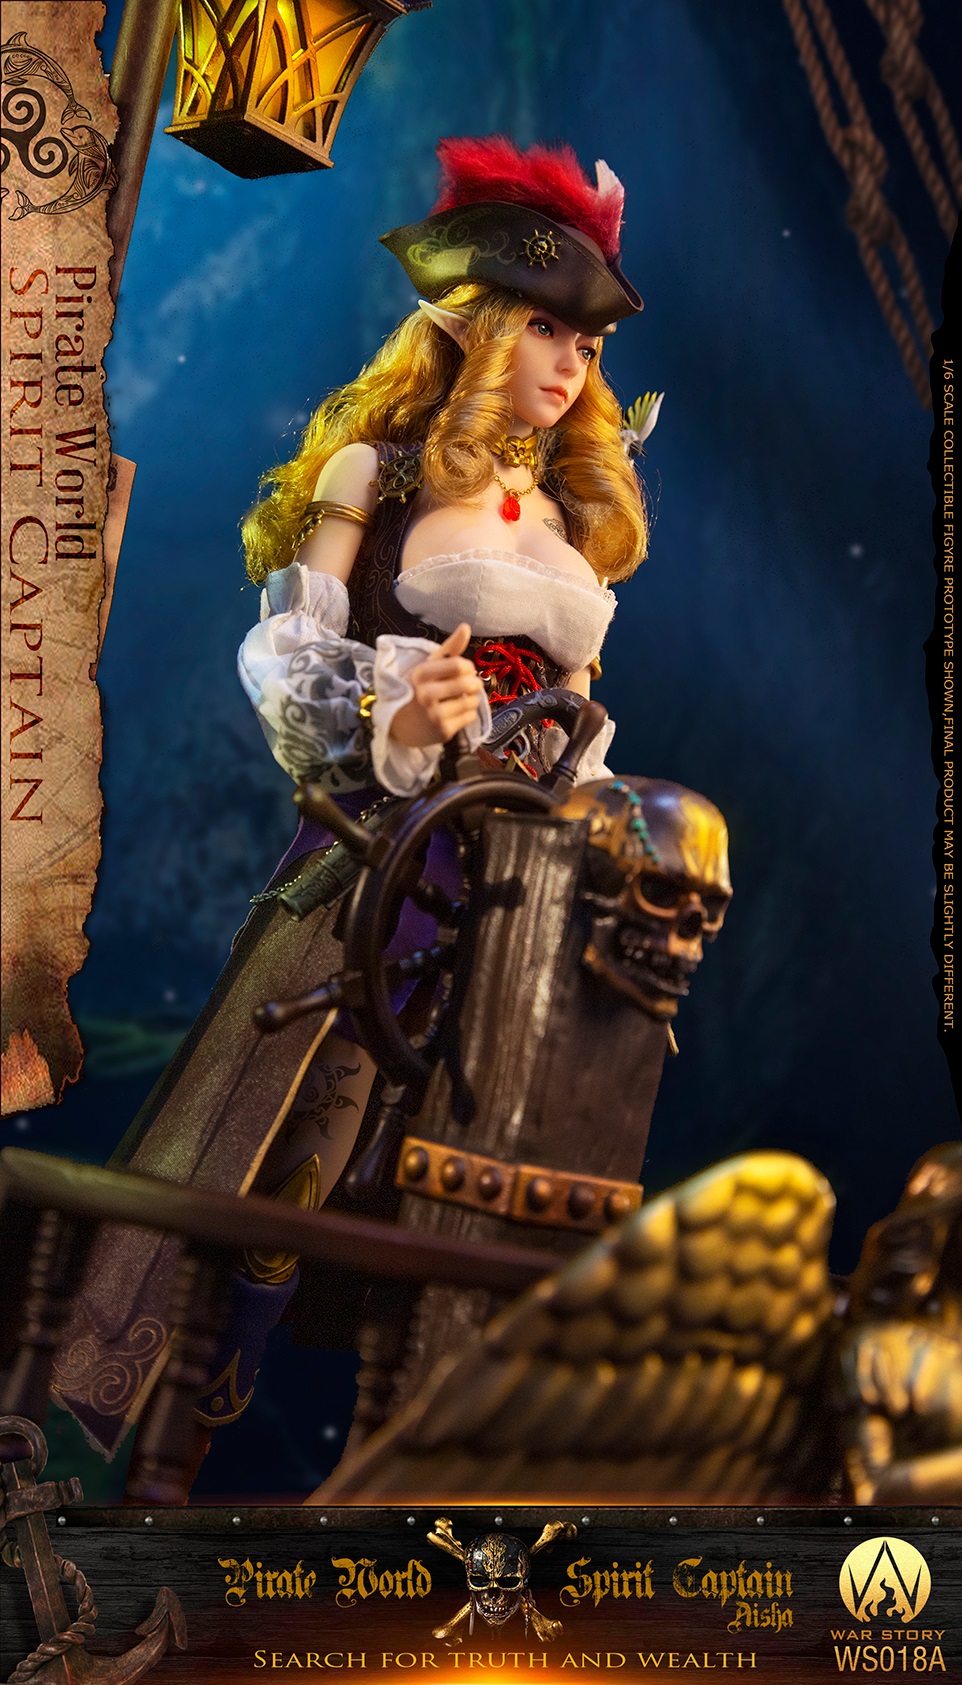 PirateShip - NEW PRODUCT: War Story: 1/6 Pirate World: Spirit Captain Aisha / Elsa Action Figure/Pirate Ship Luminous Base (WS018A/B)  10452310